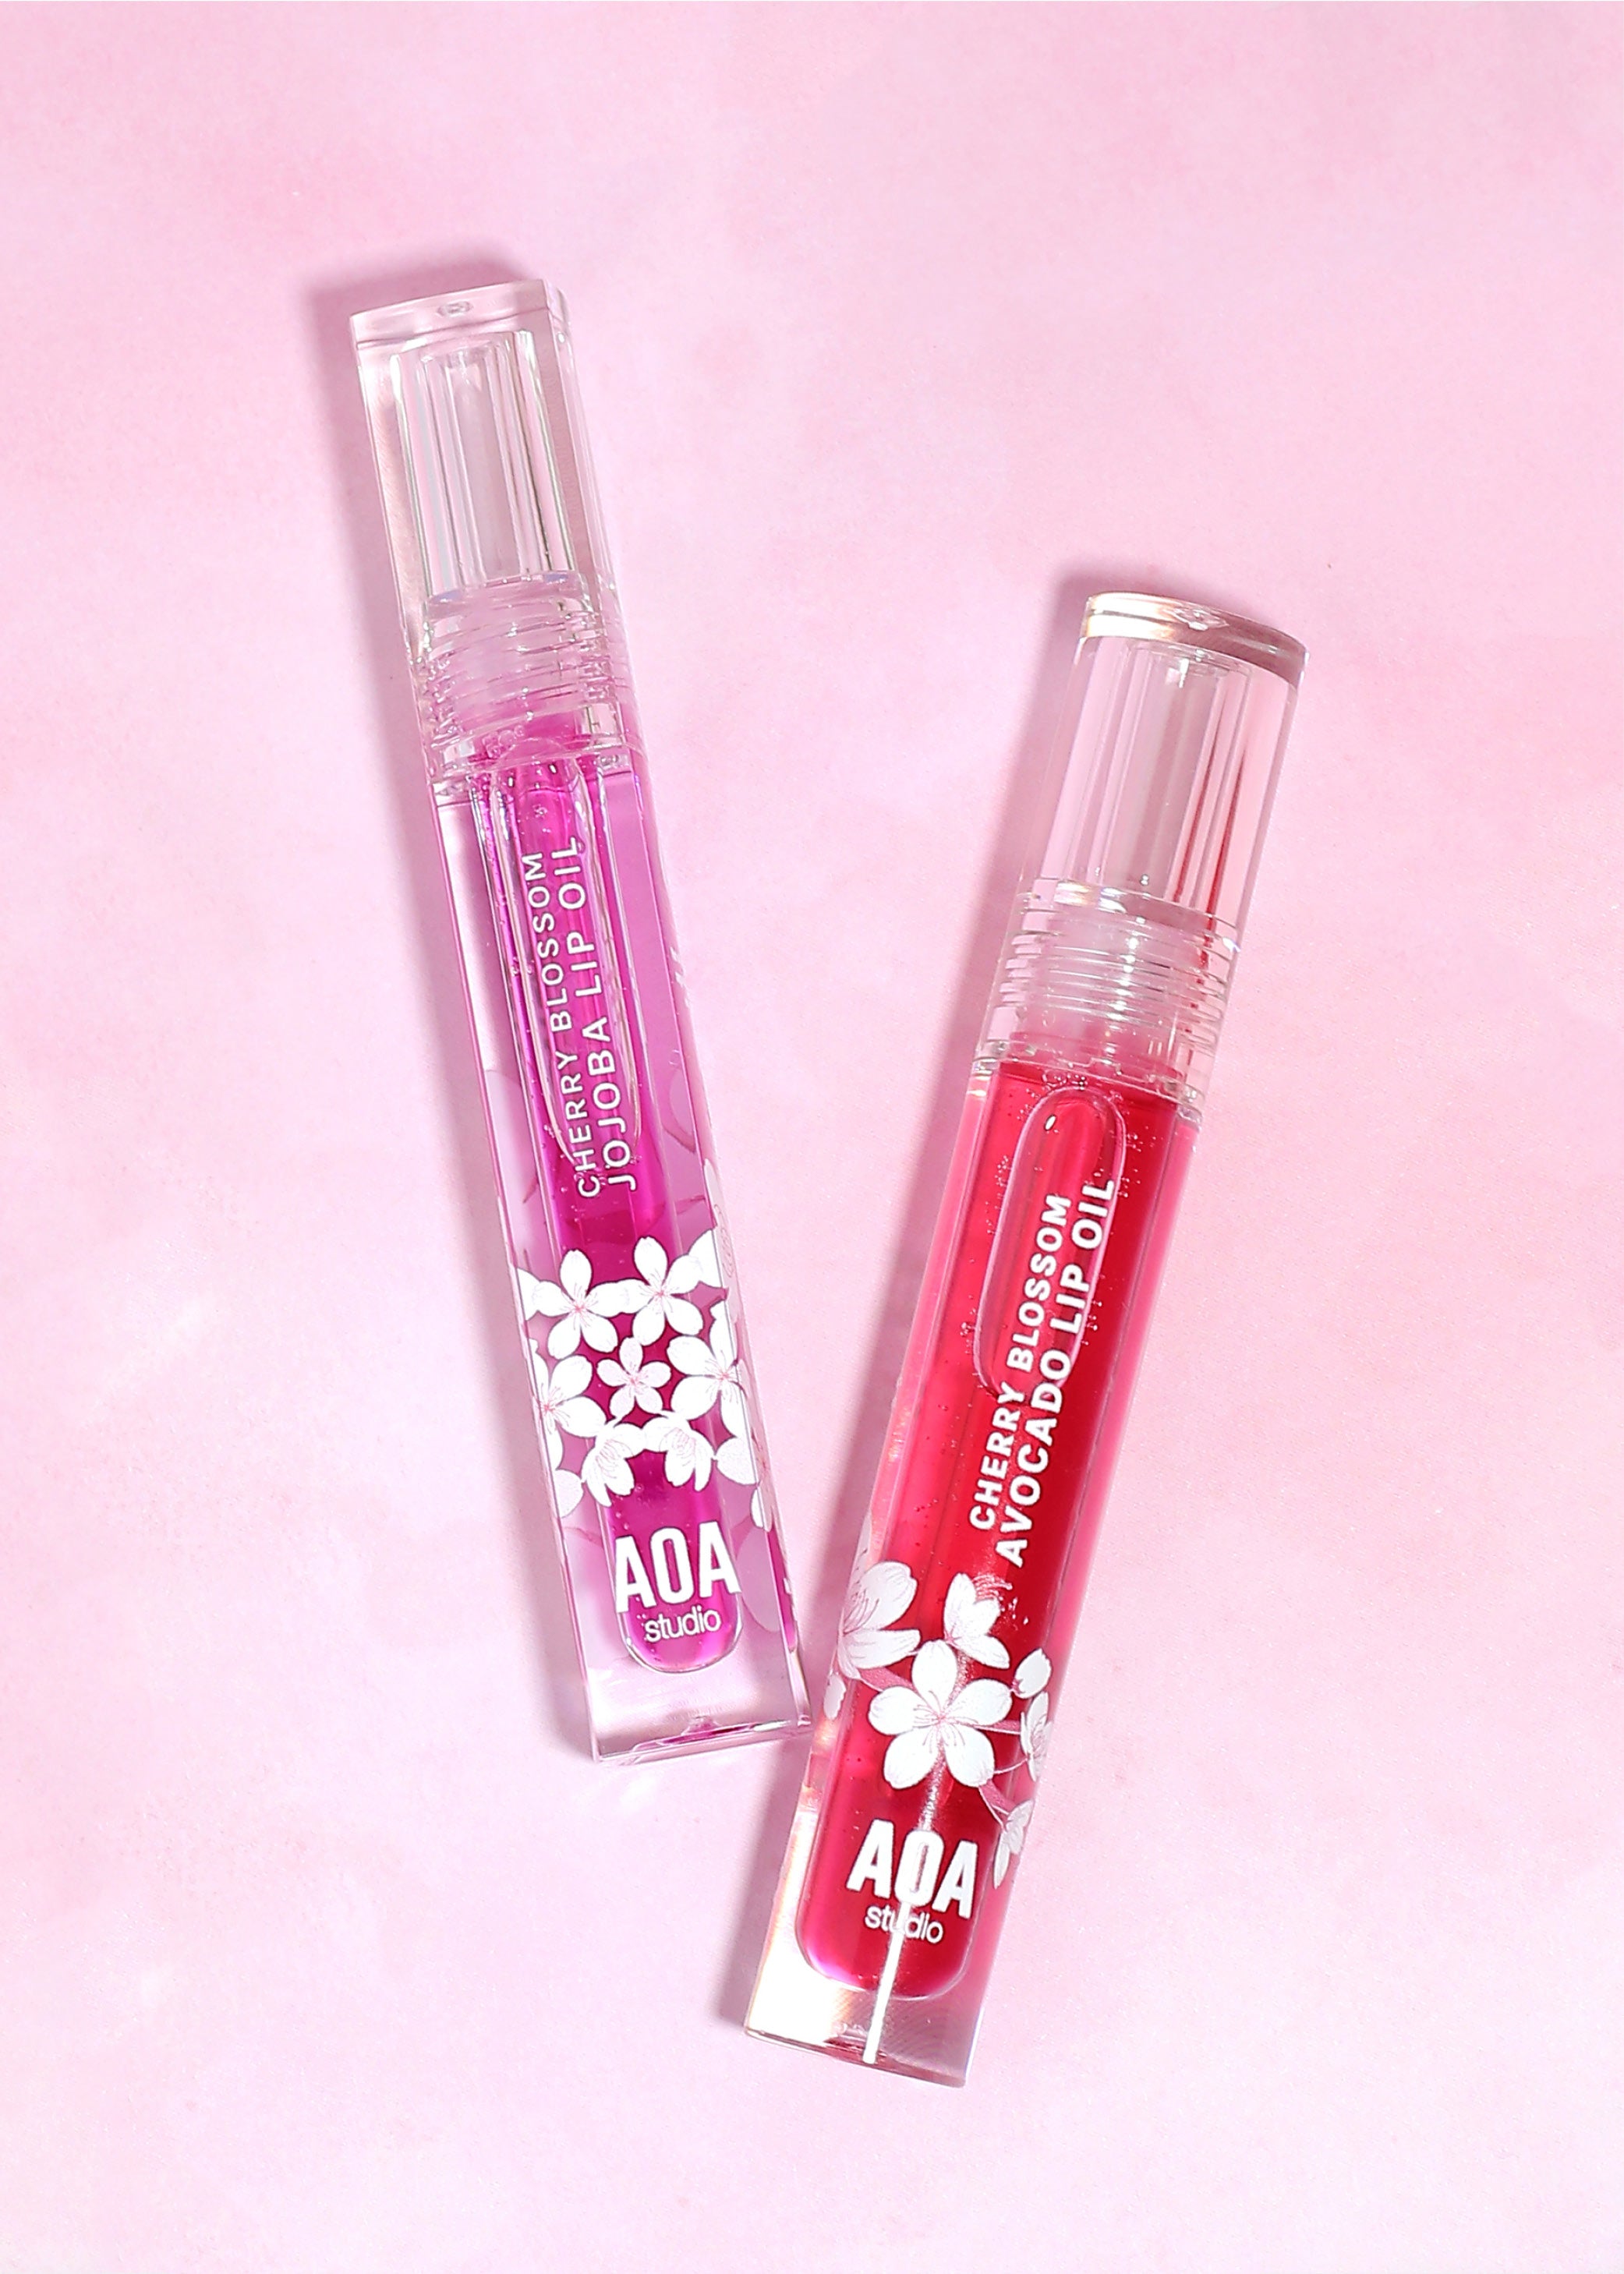 AOA Cherry Blossom Lip Oils